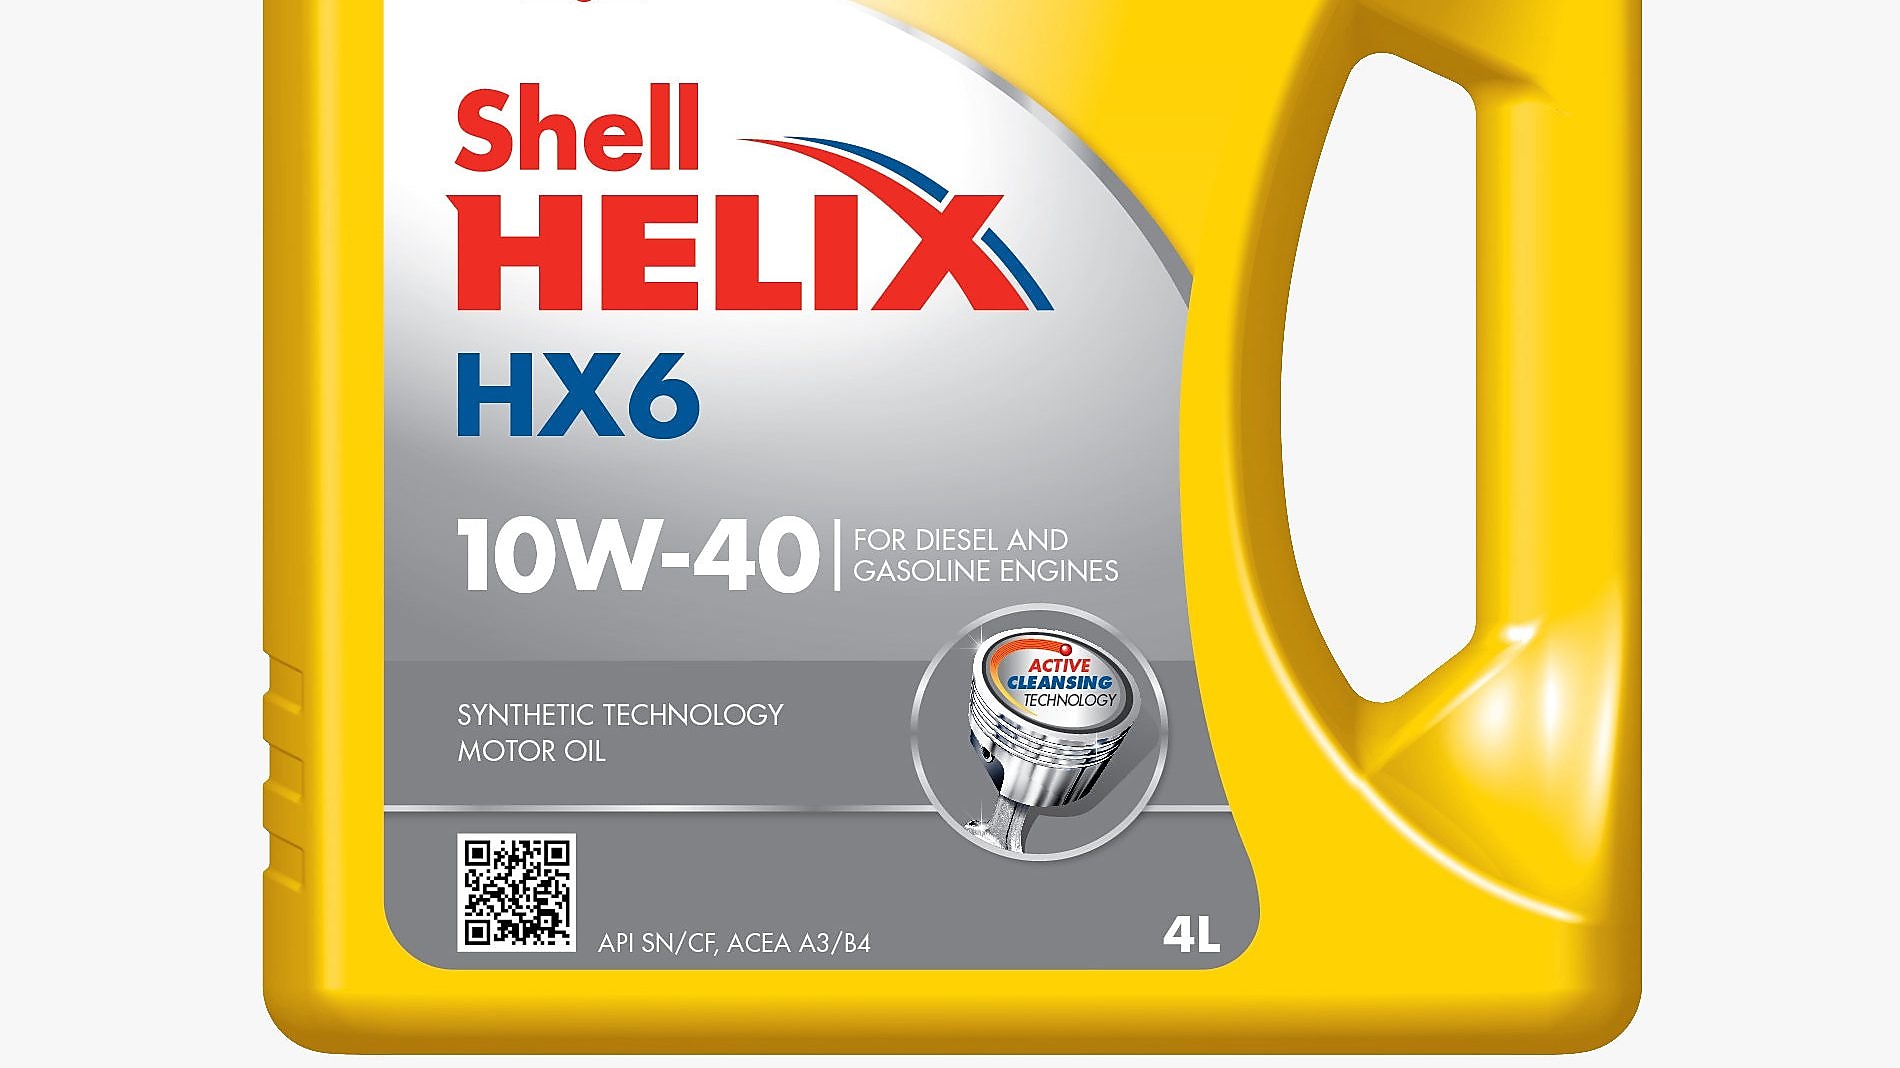 Shell Helix HX6 10W-40 Motoröl - 5L for sale online